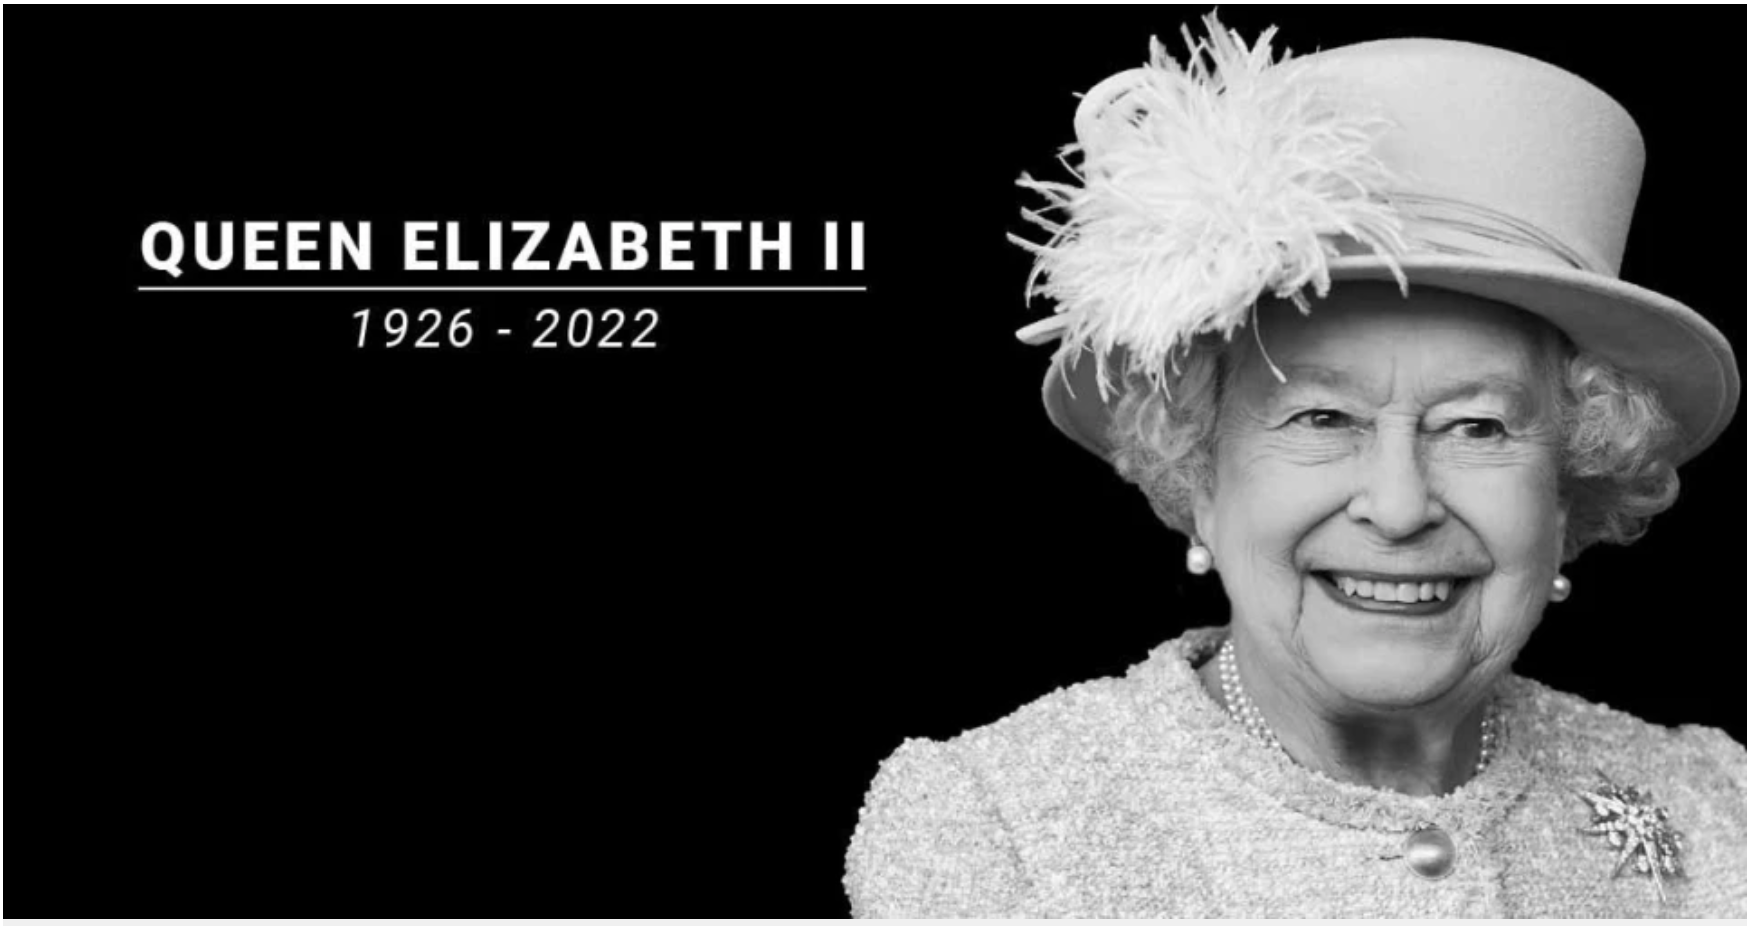 Rest in Peace HRH Queen Elizabeth II